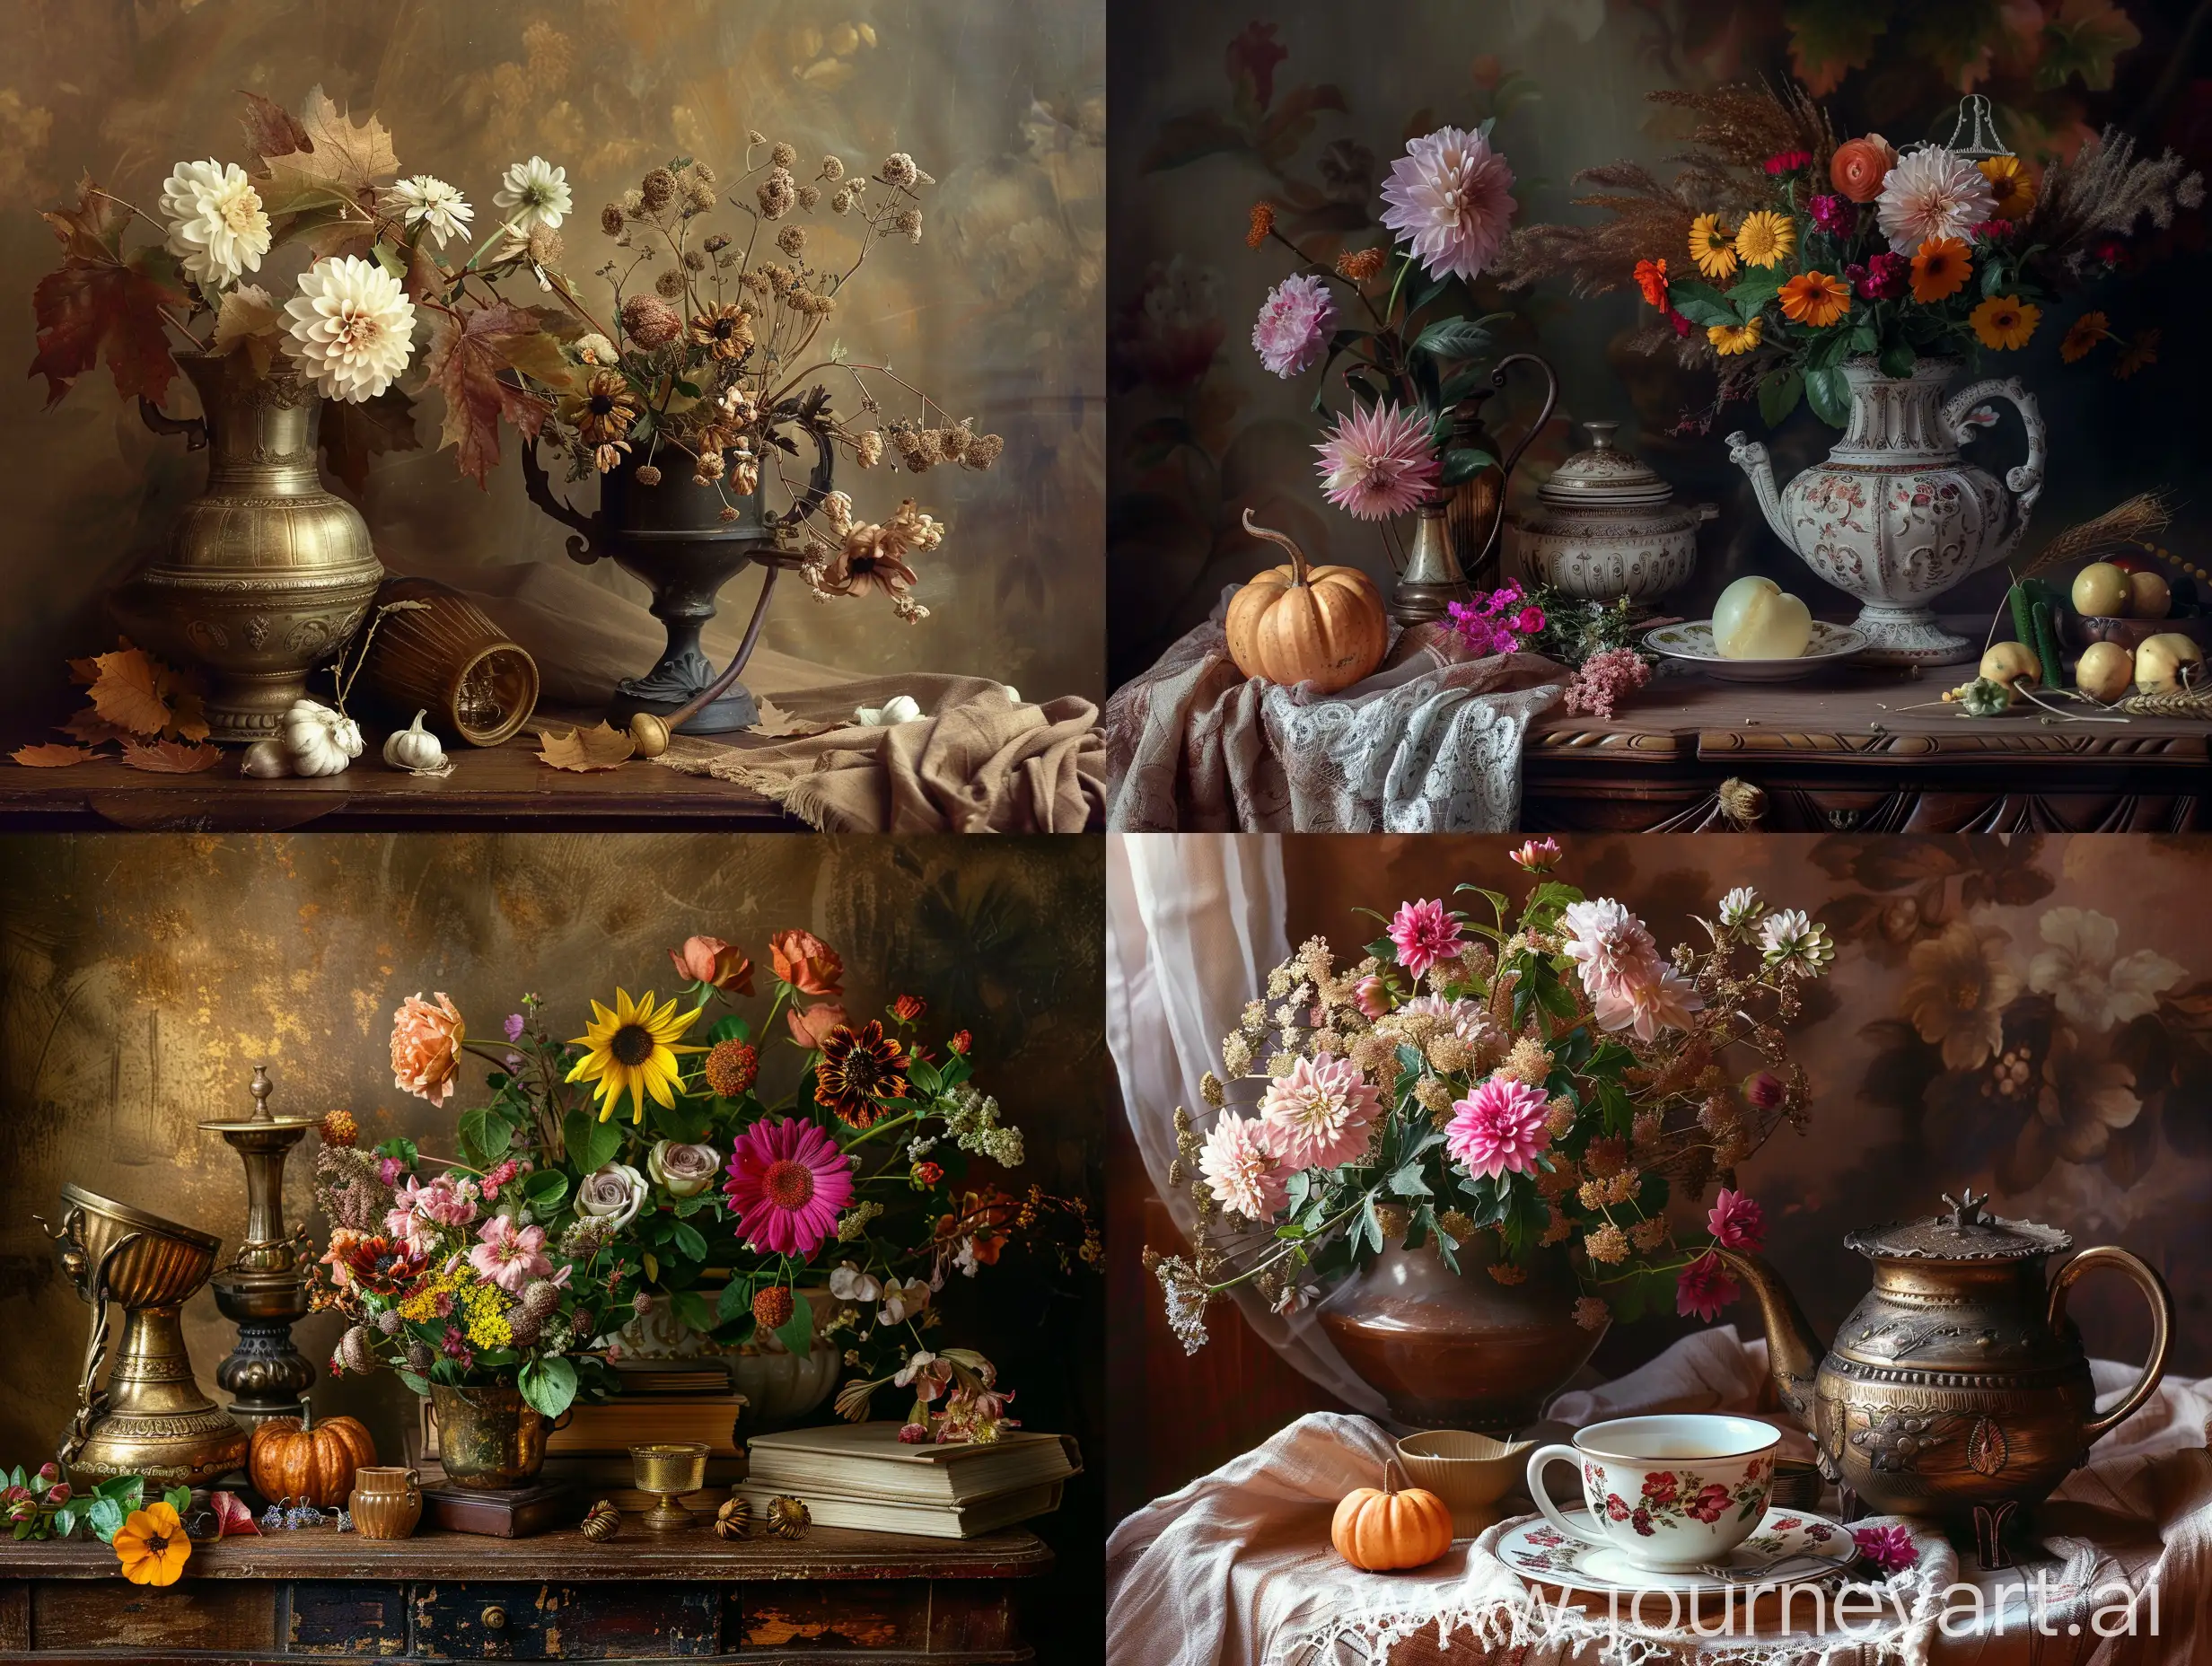 photo, autumn still life, vintage items 19th century, flowers, best quality, 4k, studio lighting, neutral colors